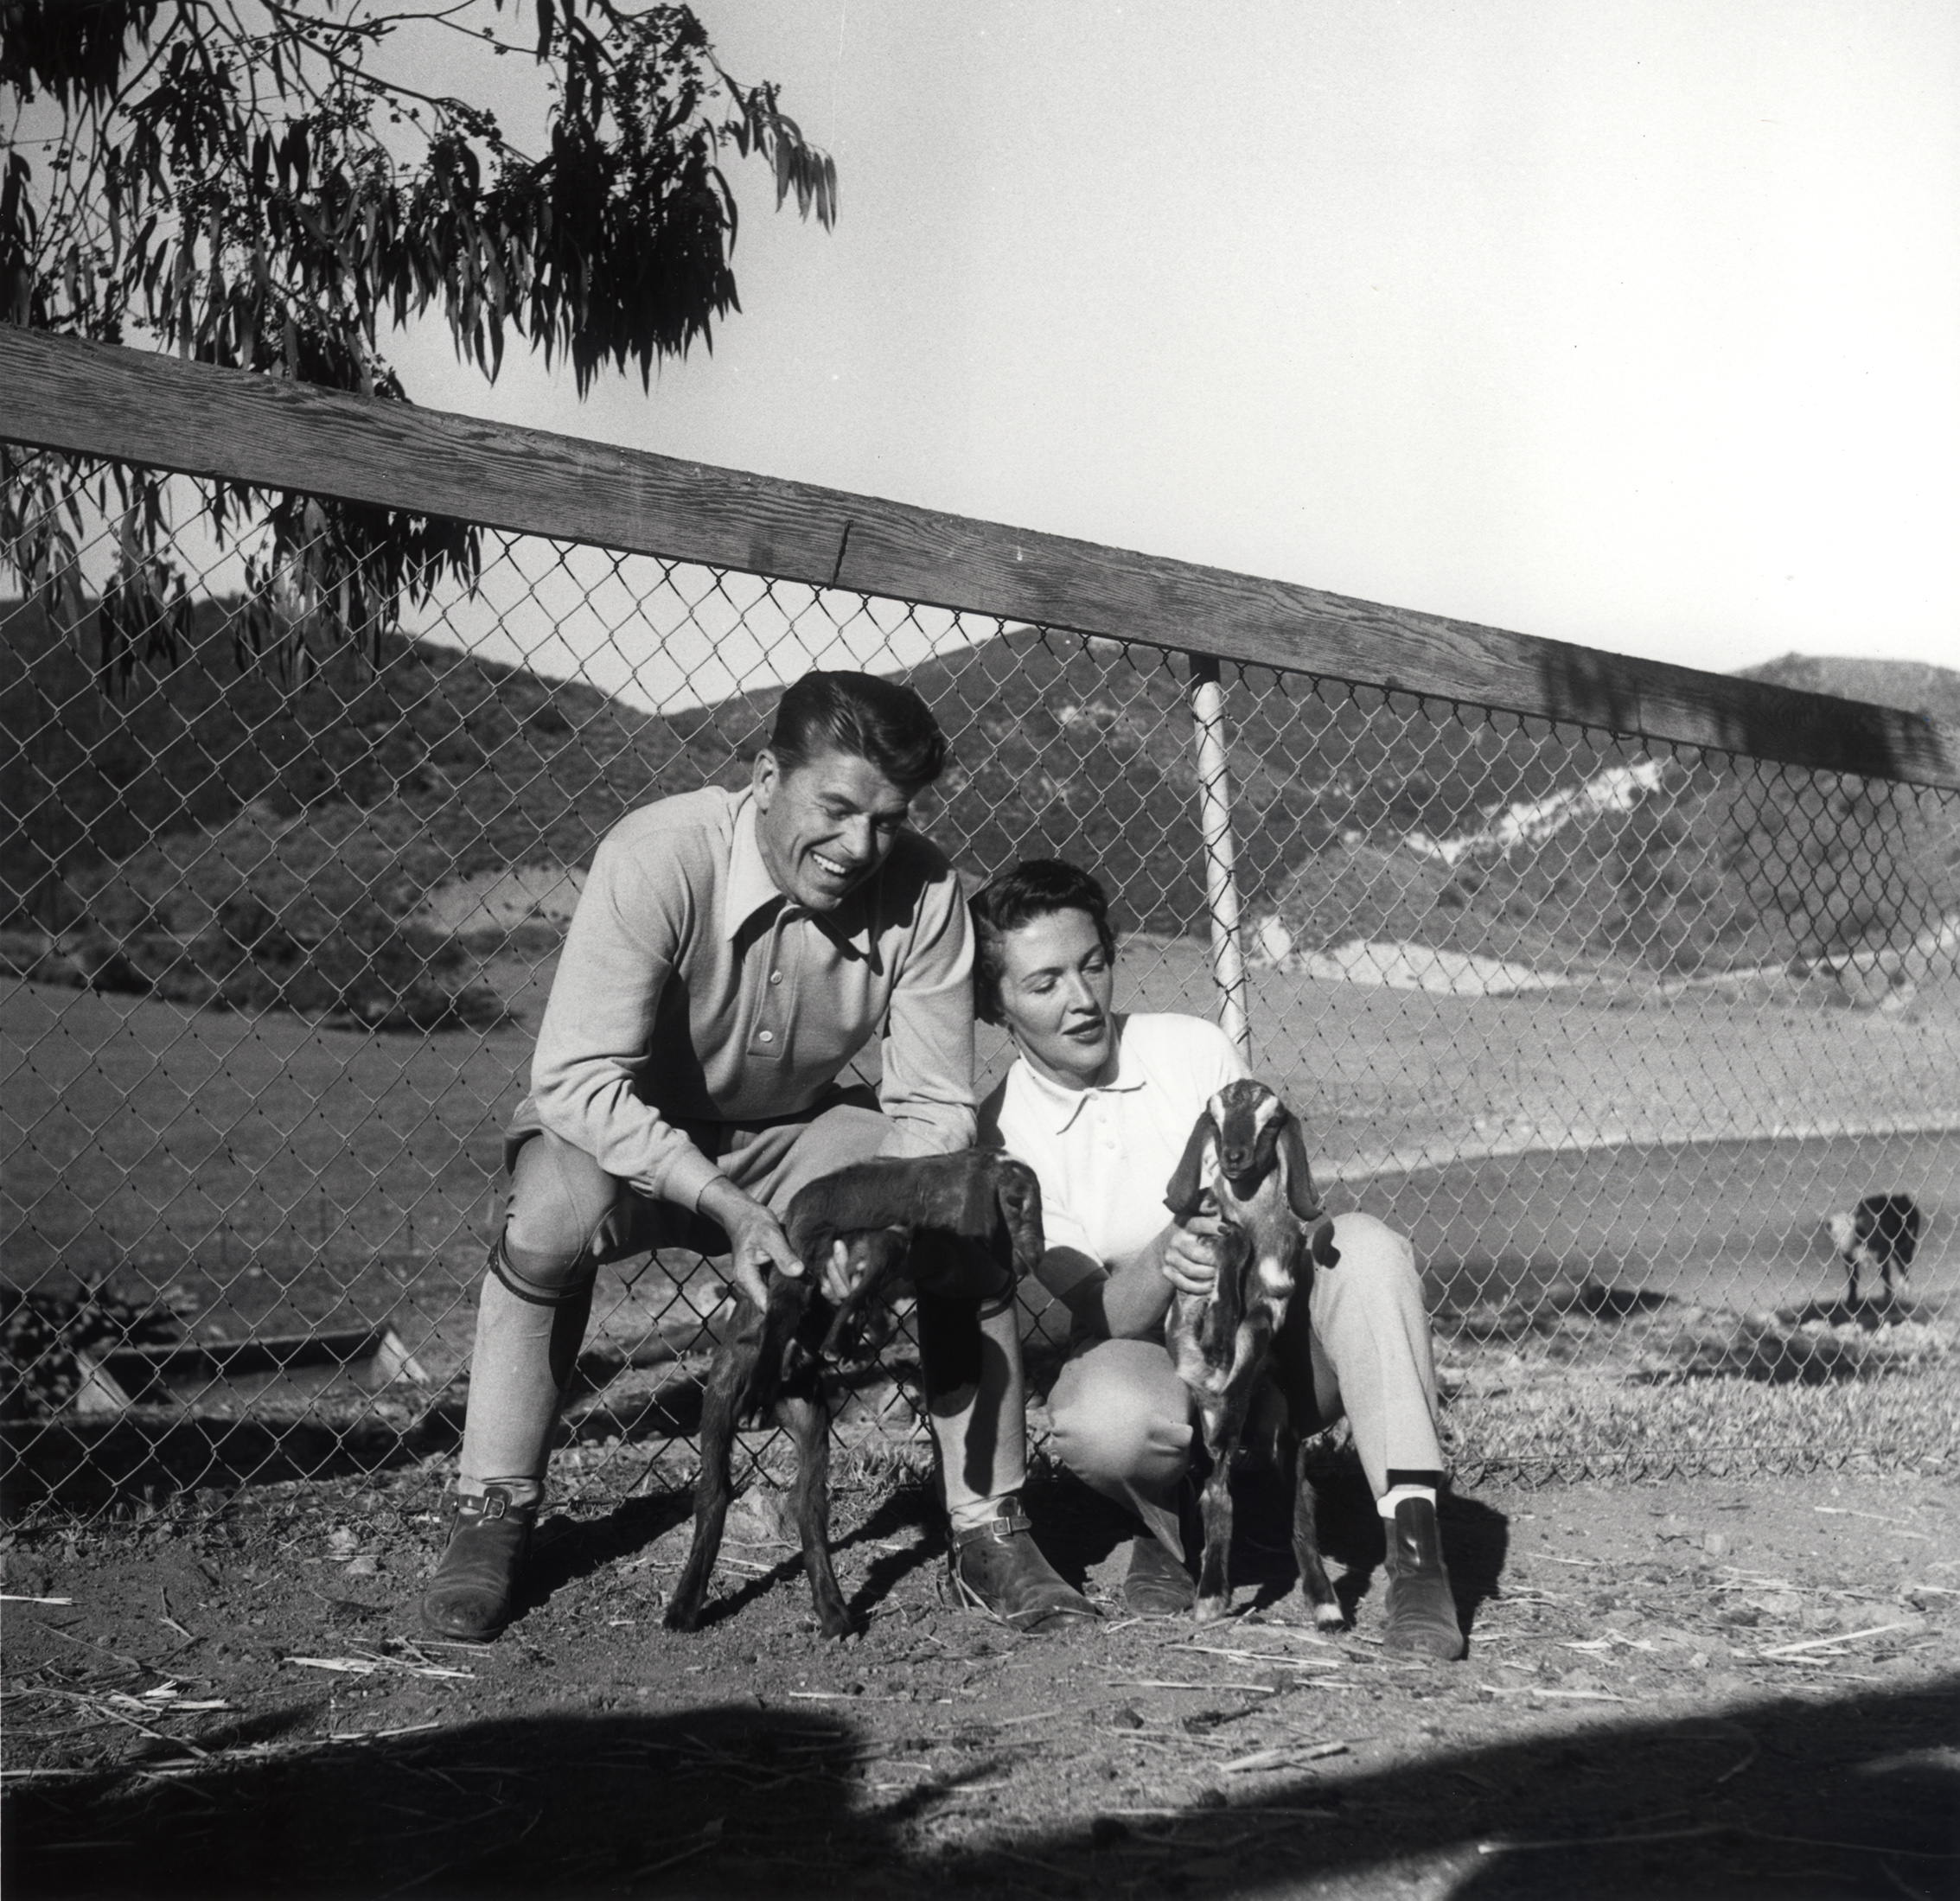 Ronald Reagan and Nancy Reagan posing with their goats “Nubie” and “Heidi” at Malibu Canyon Ranch